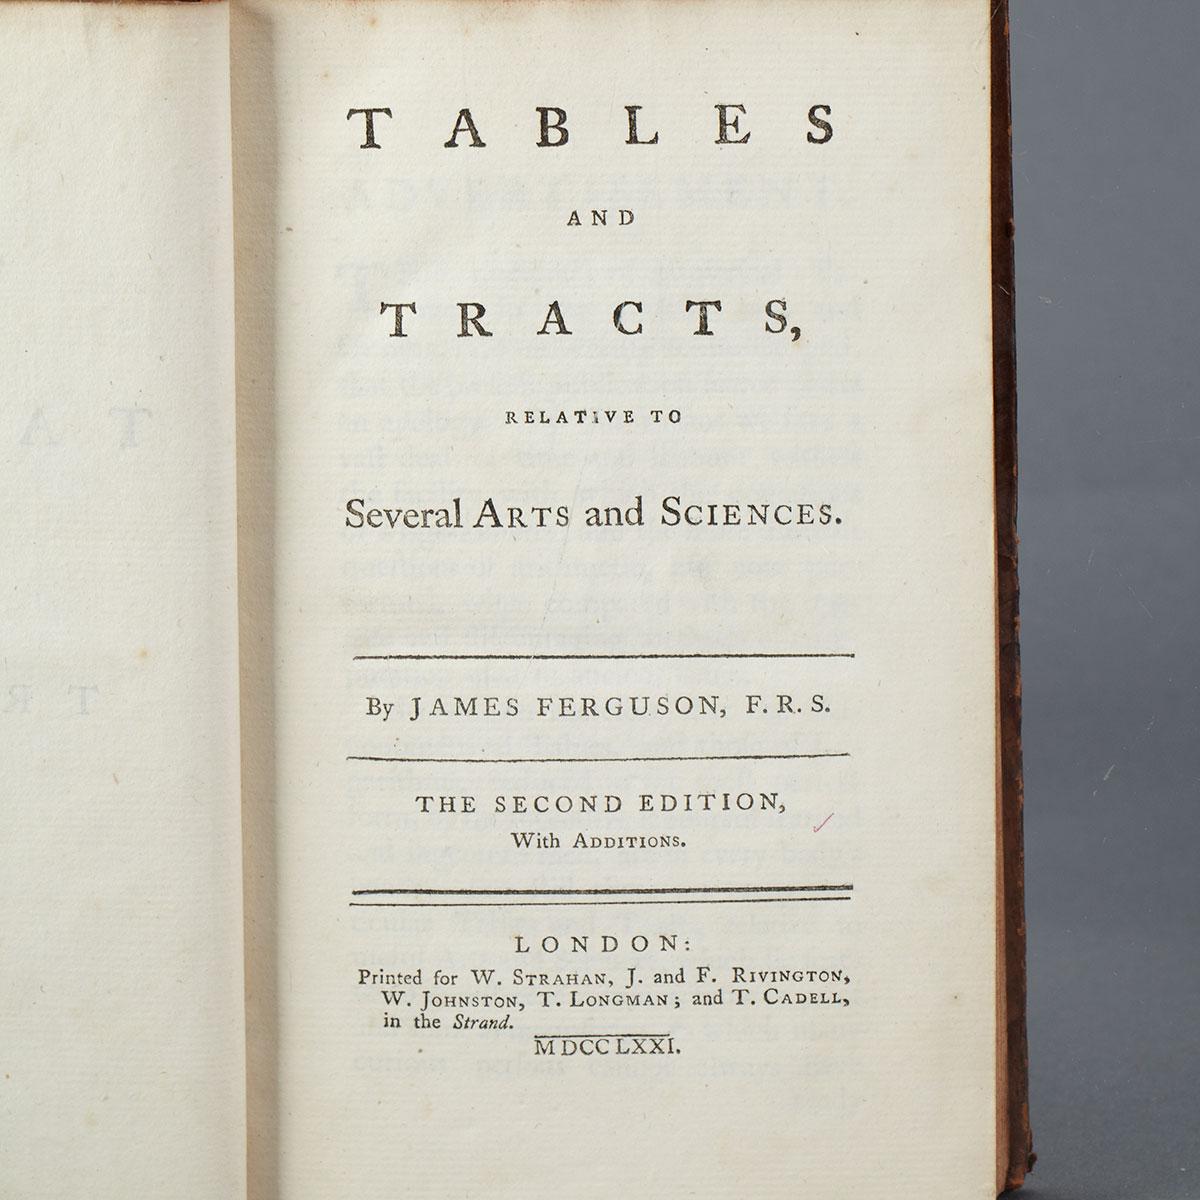 James Ferguson, F. R. S. (1710-1776)